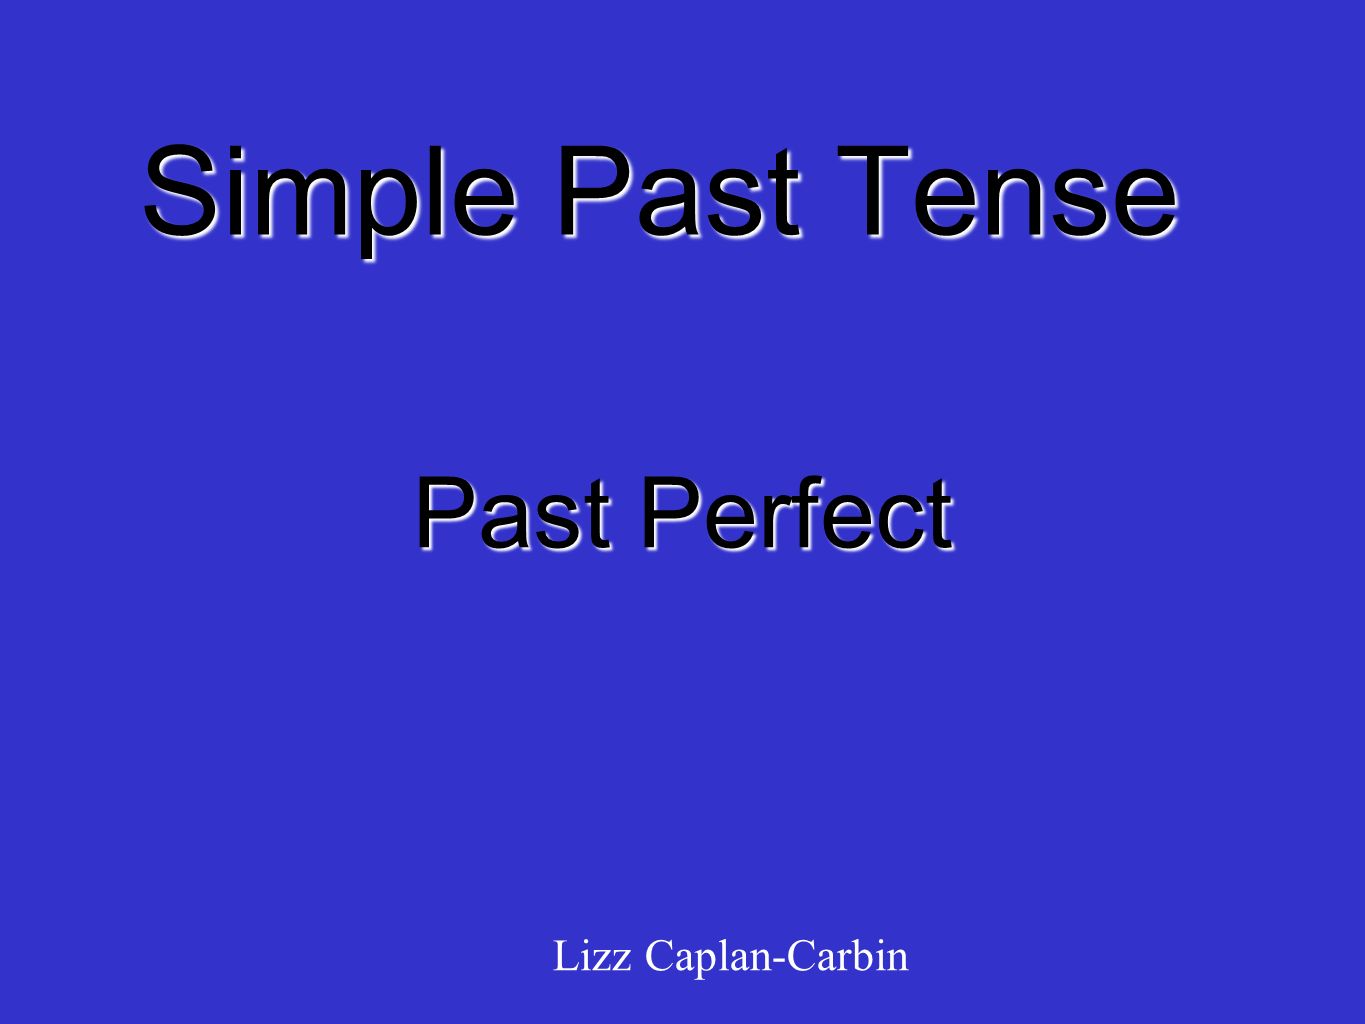 Simple Past Tense Past Perfect Lizz Caplan-Carbin